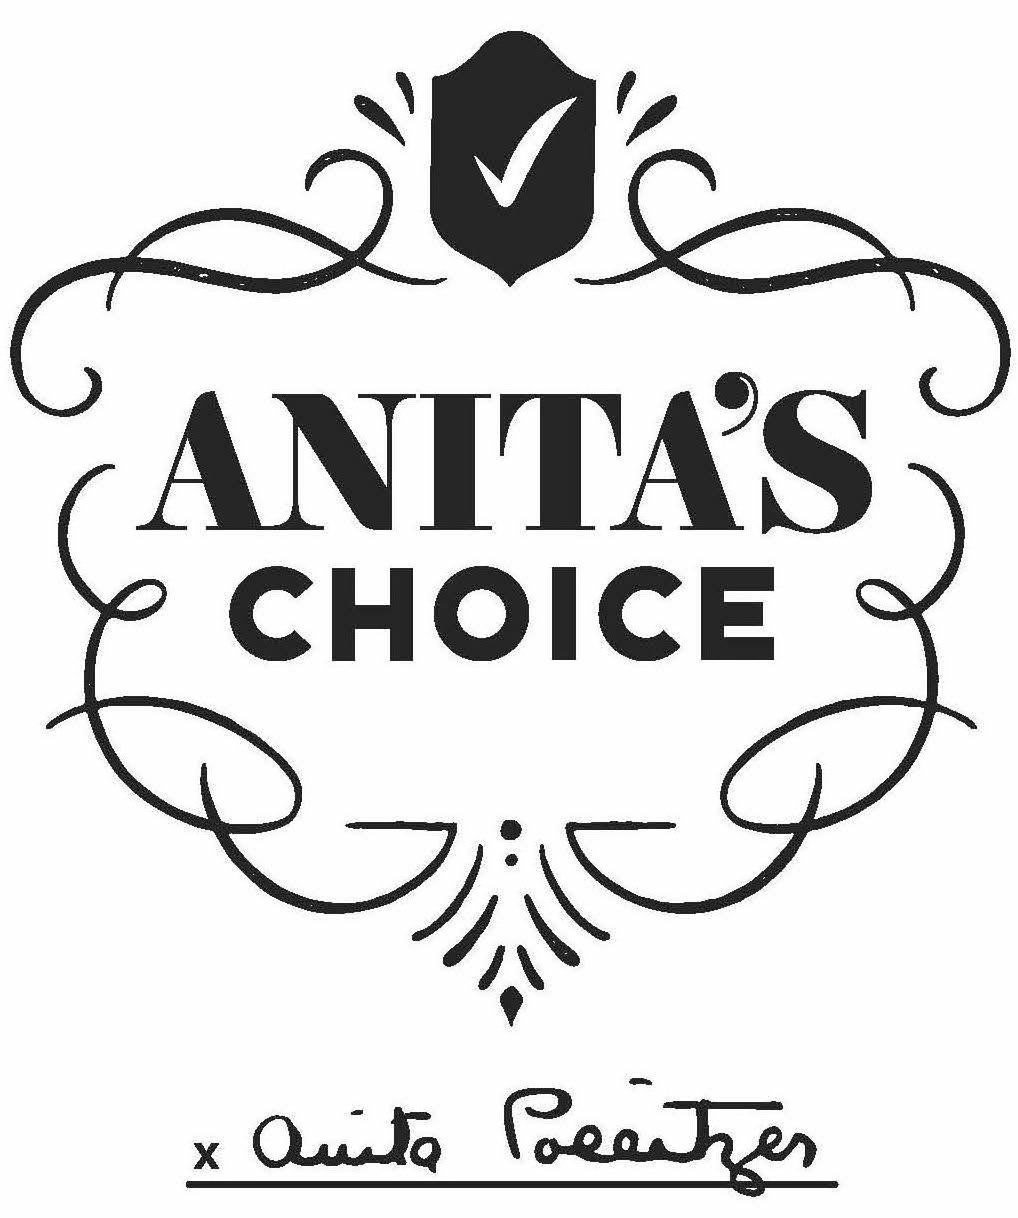  ANITA'S CHOICE X ANITA POLLITZER